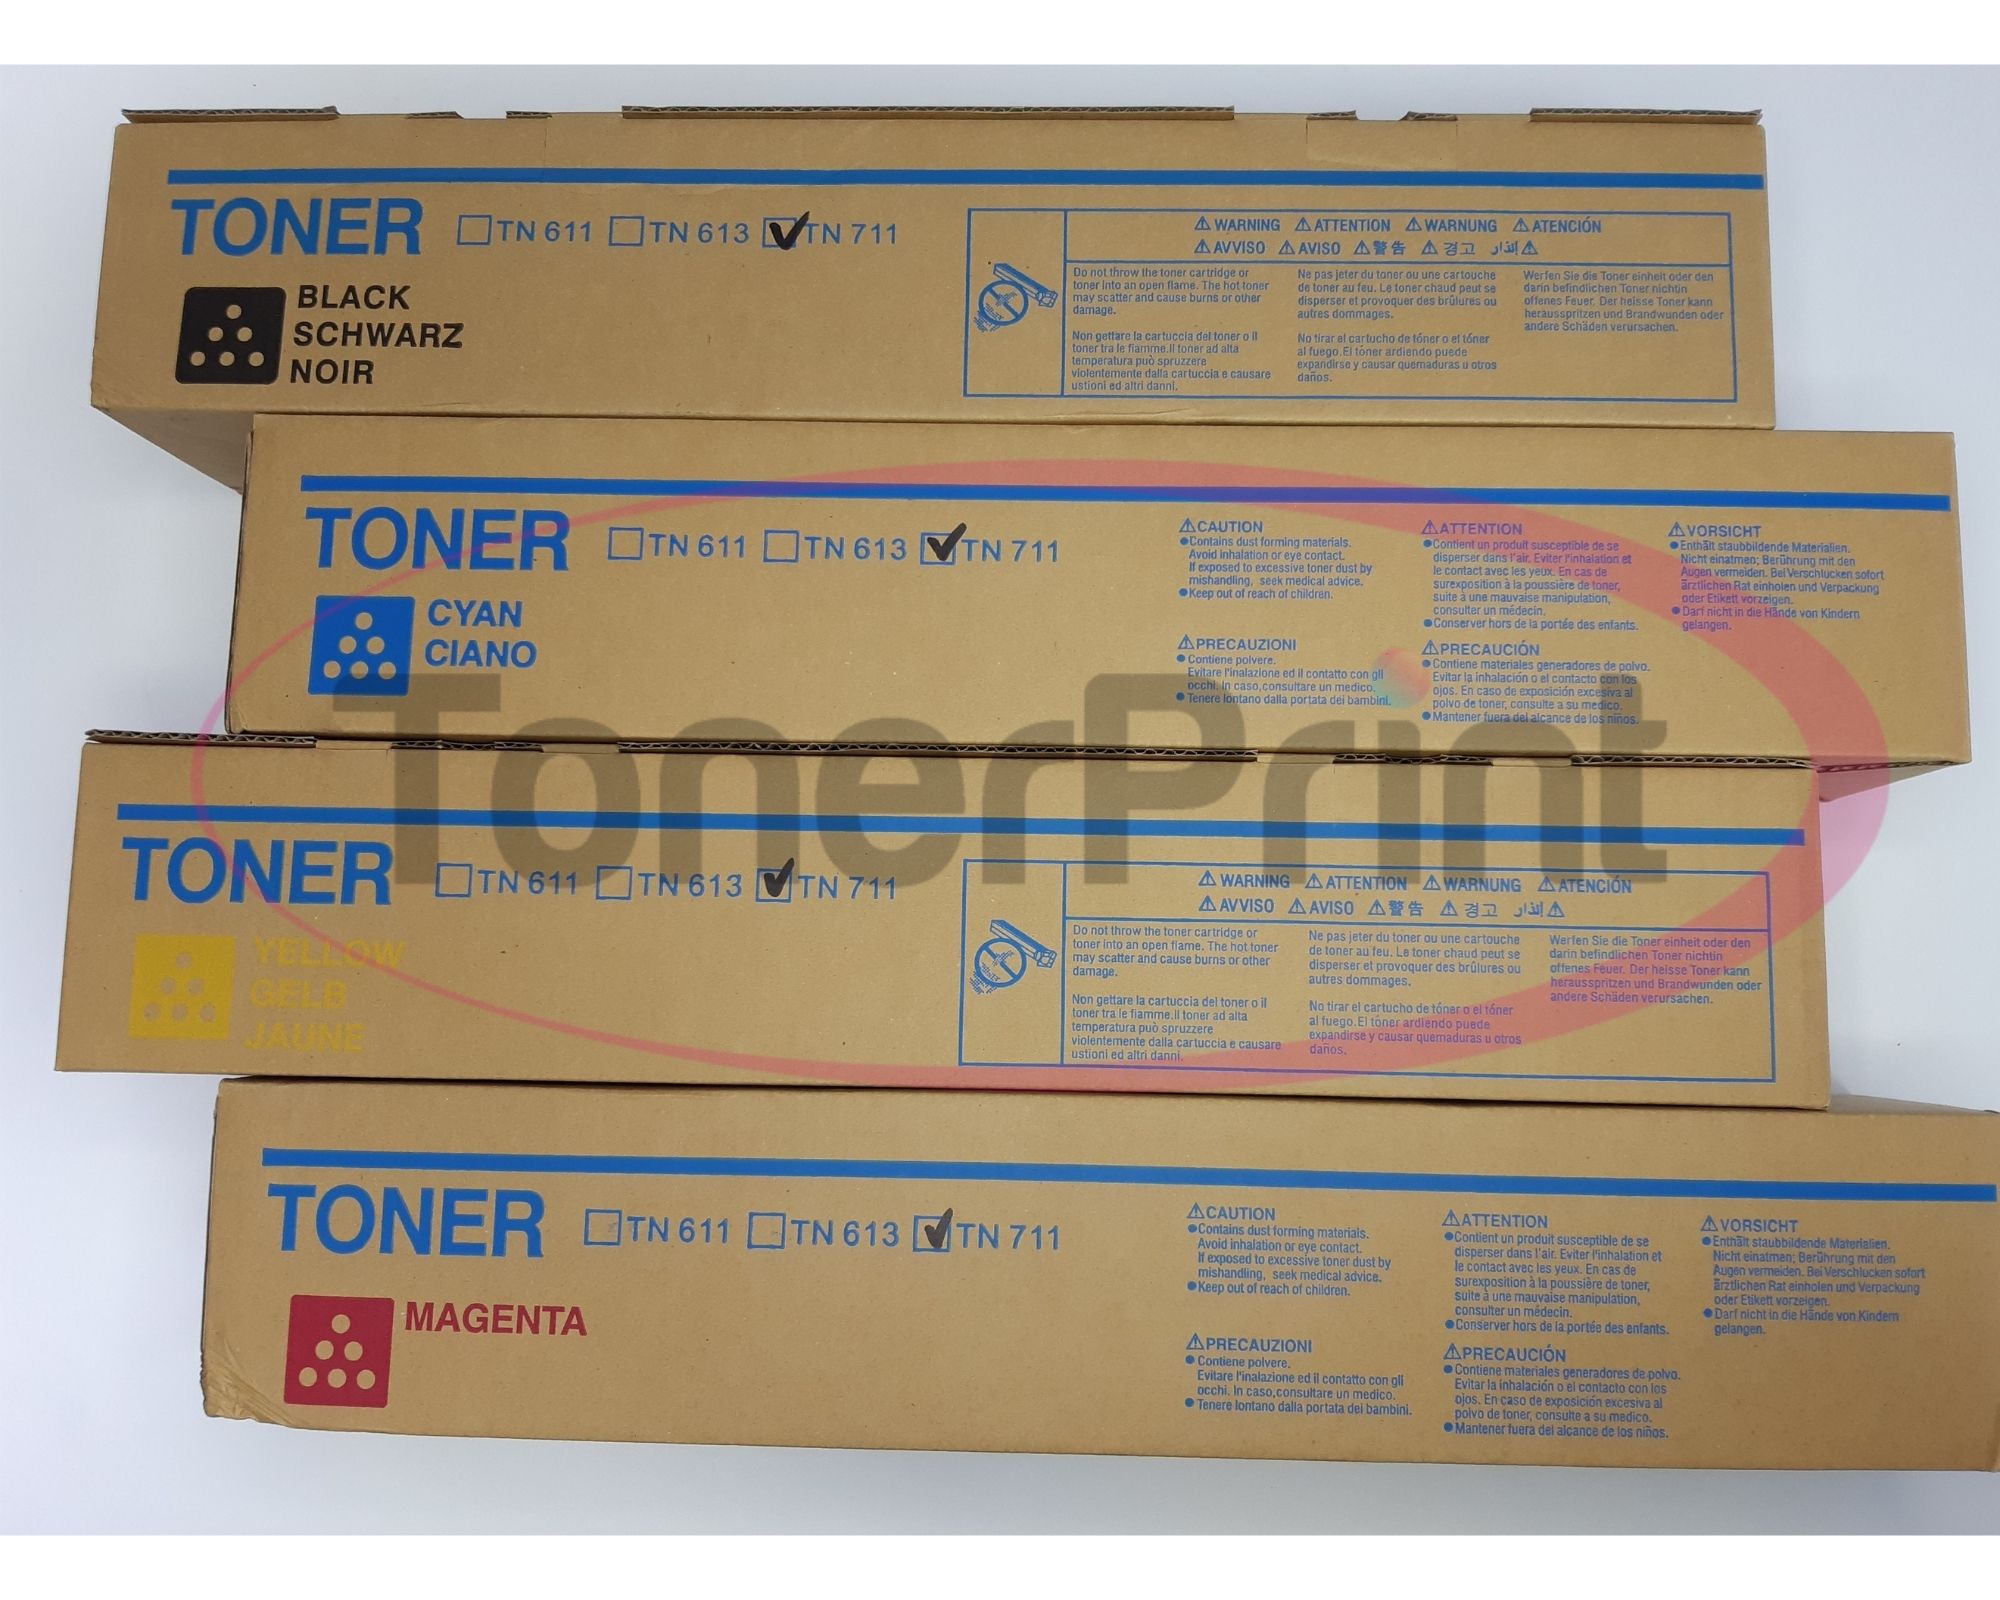 impresoras y scanners - TONER KONICA TN711